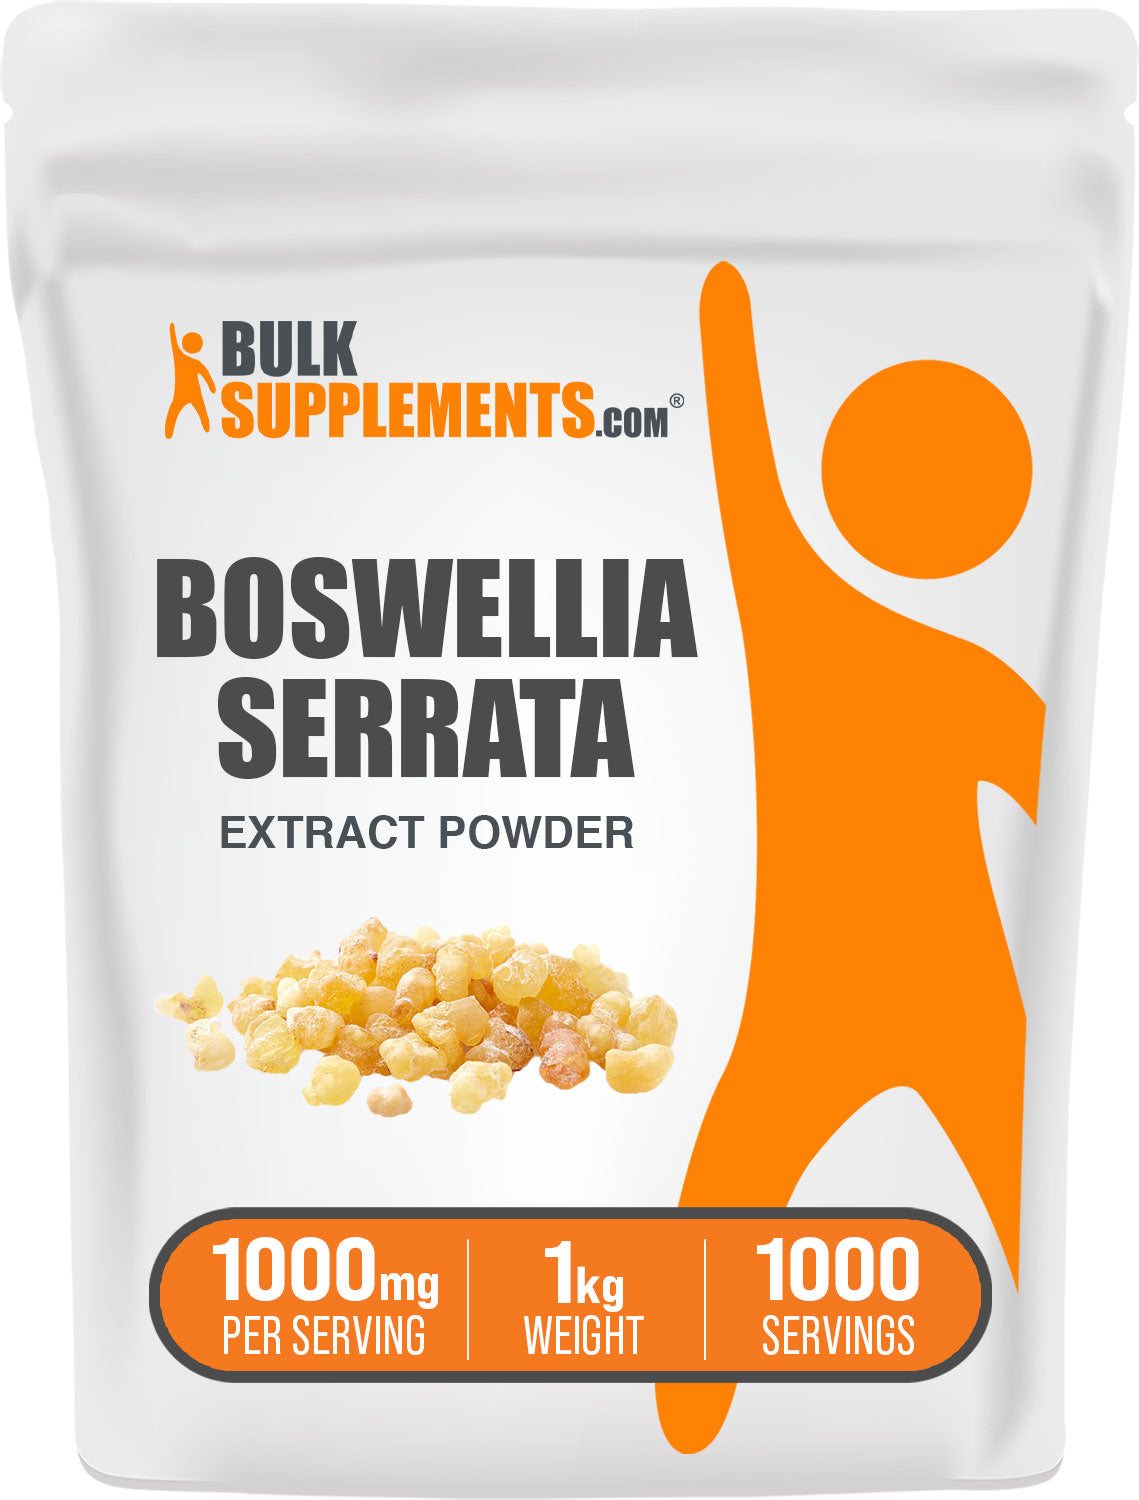 1kg of boswellia serrata